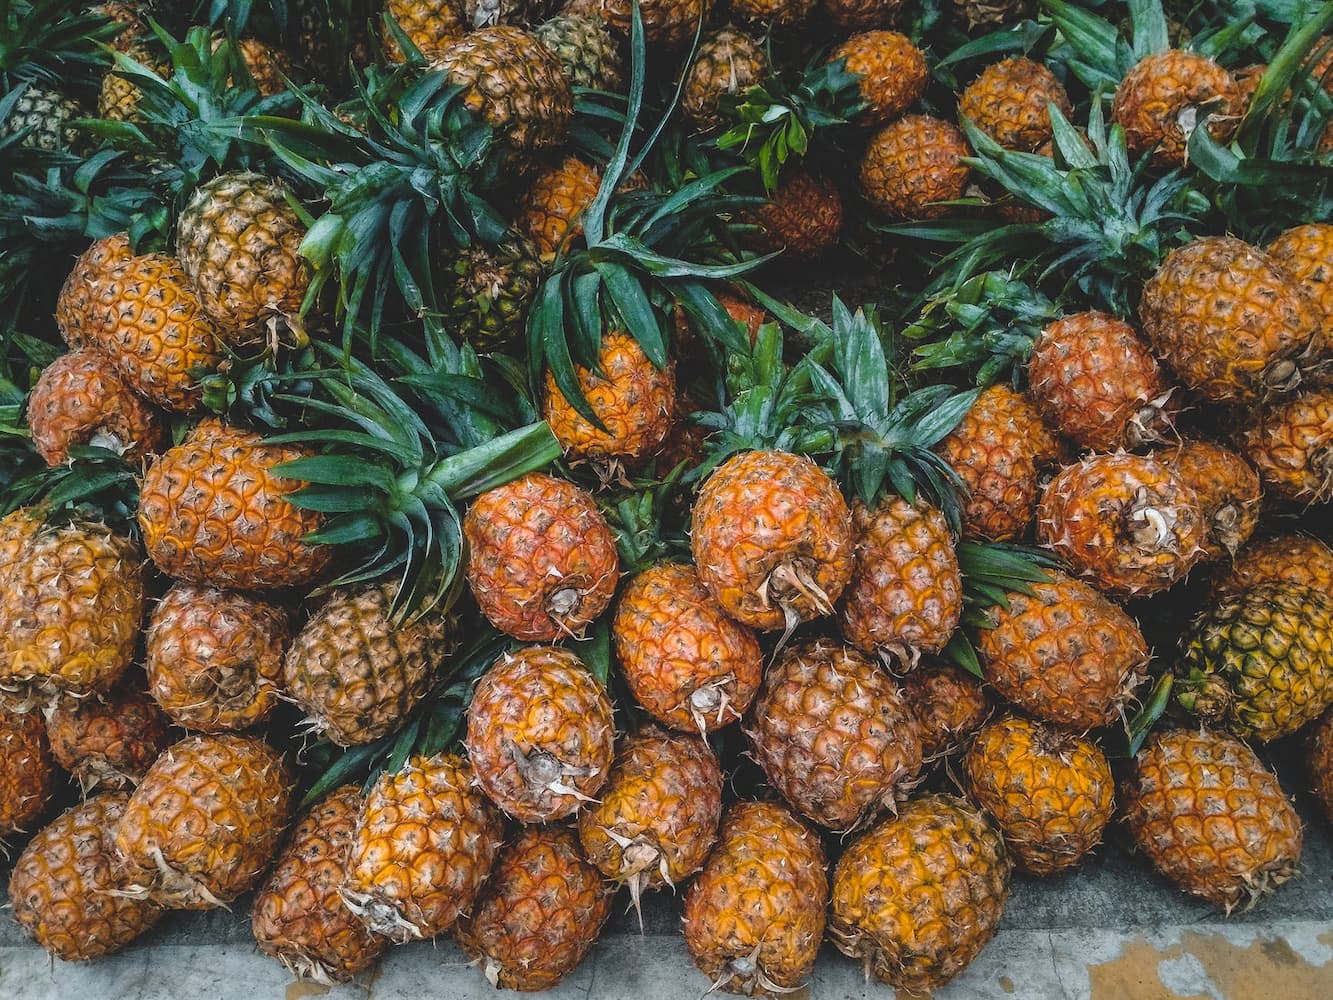 Pineapples contain bromelain, which is good for rheumatoid arthritis